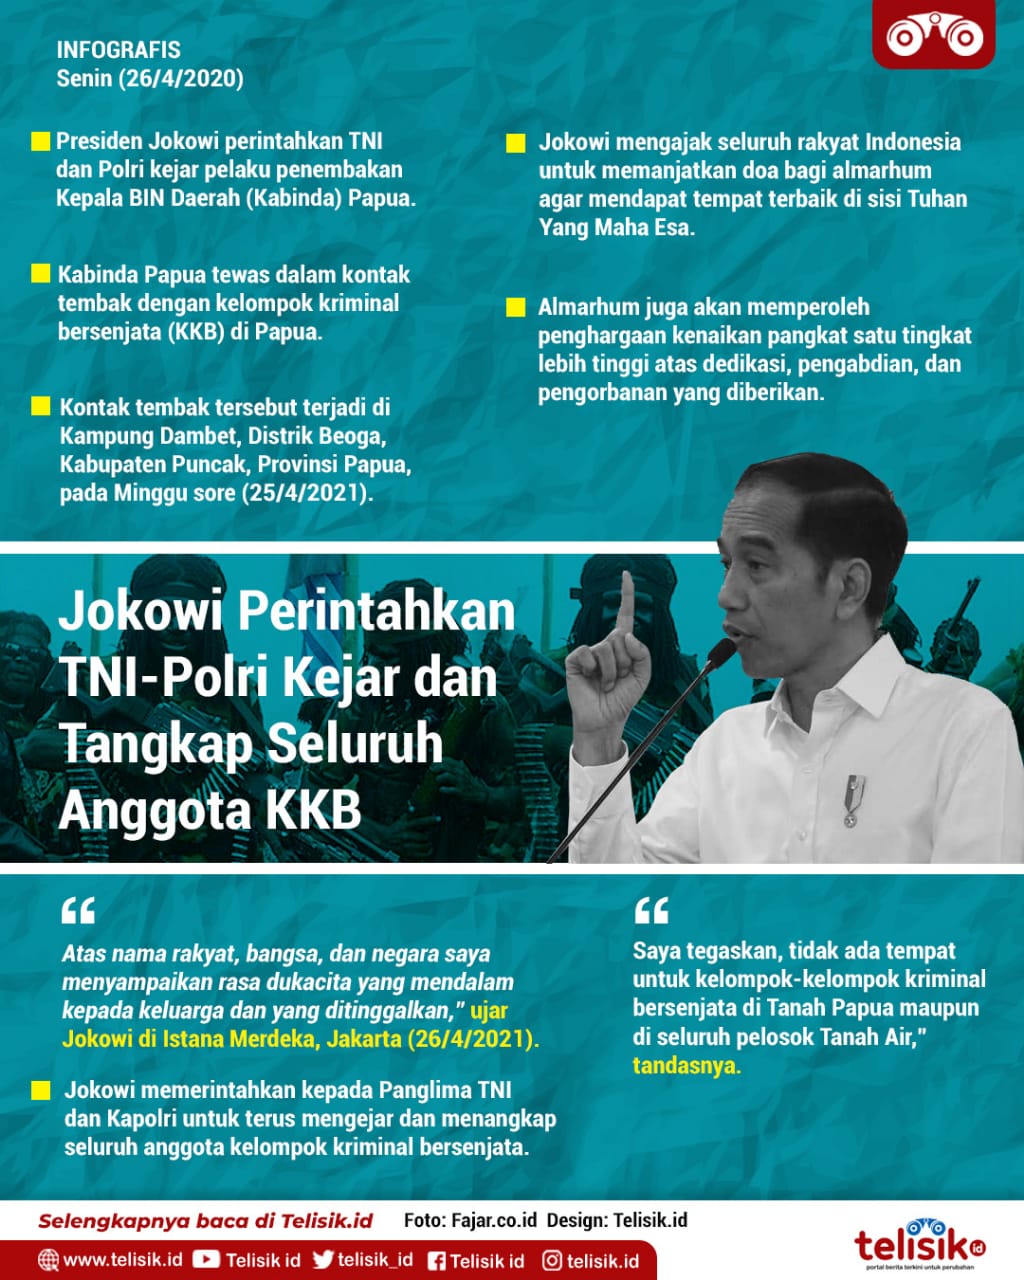 Infografis: Jokowi Perintahkan TNI-Polri Kejar dan Tangkap Seluruh Anggota KKB